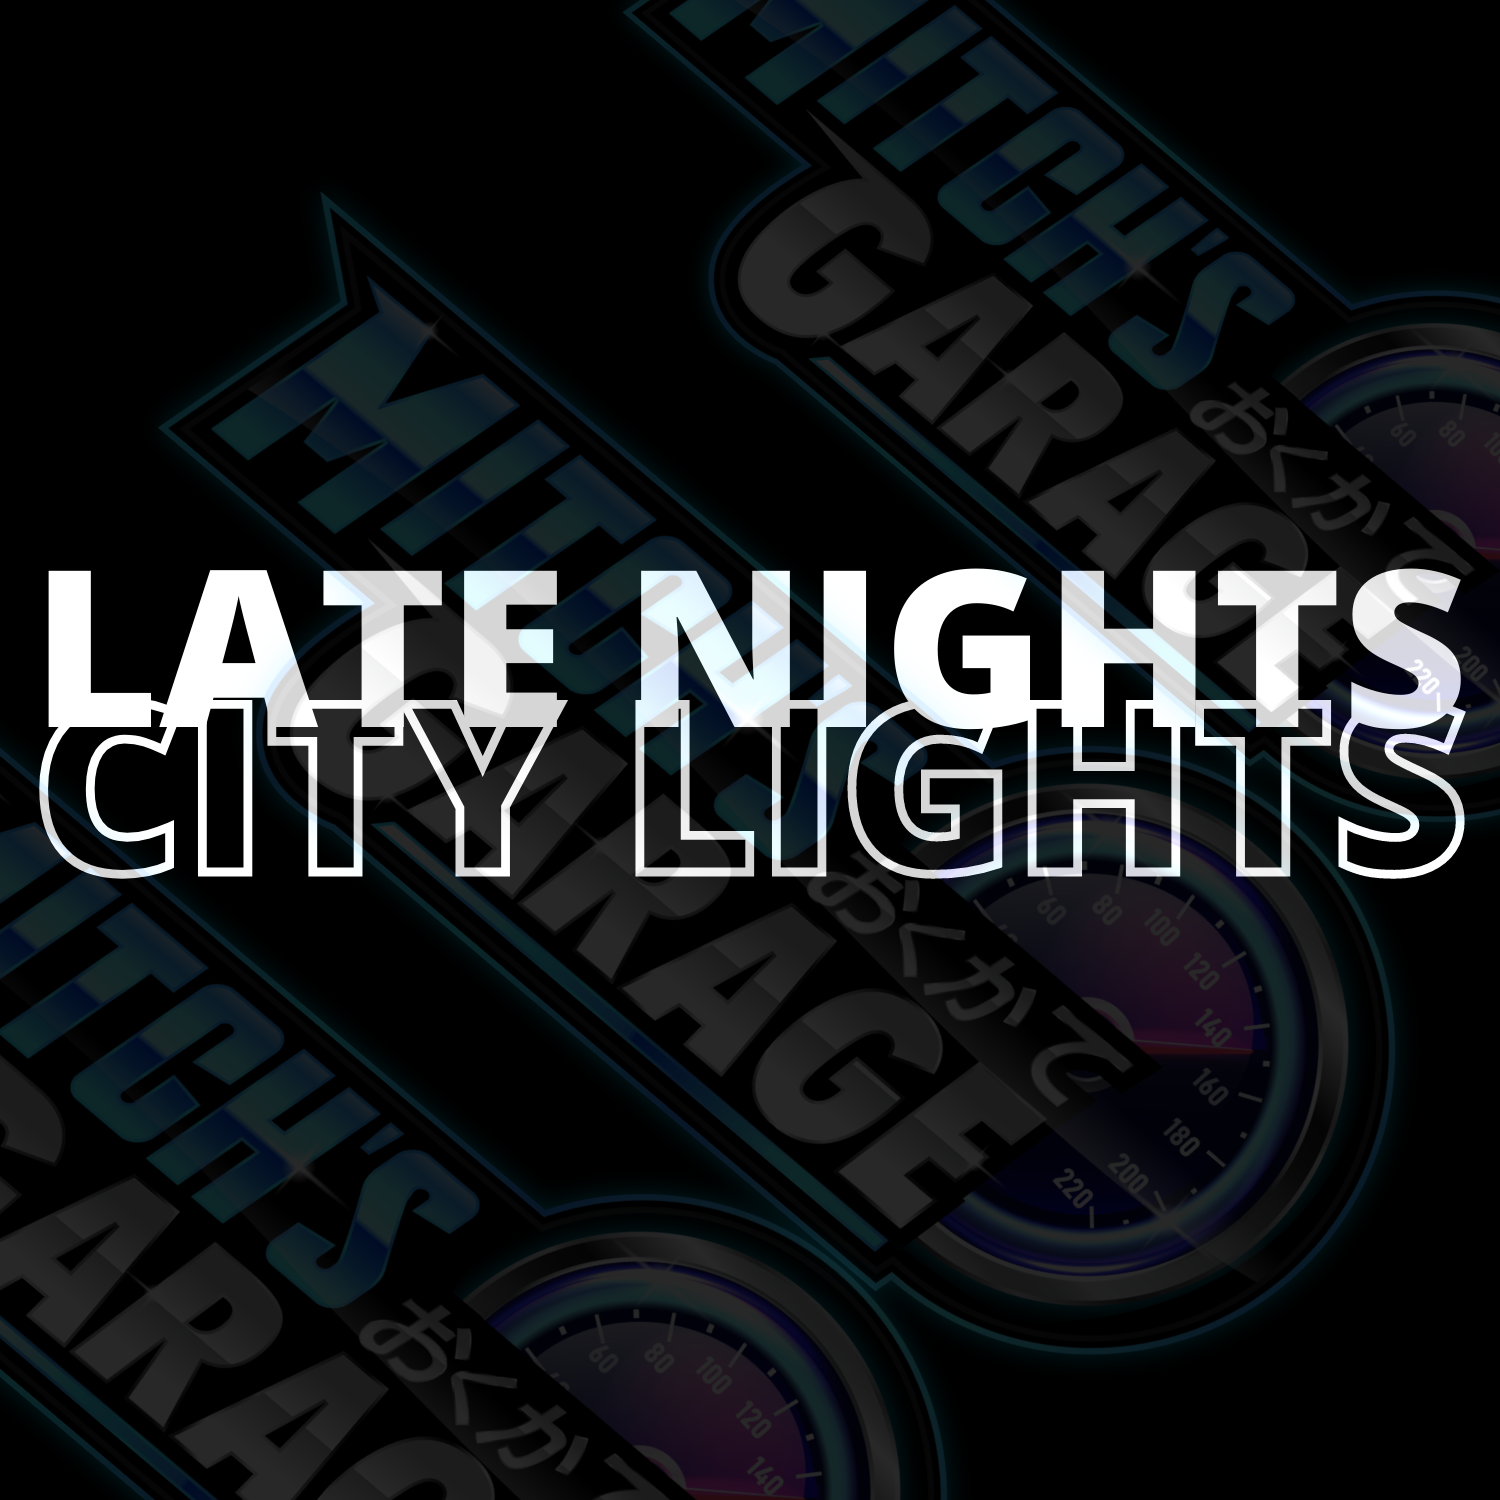 LATE NIGHTS CITY LIGHTS Vinyl Decal